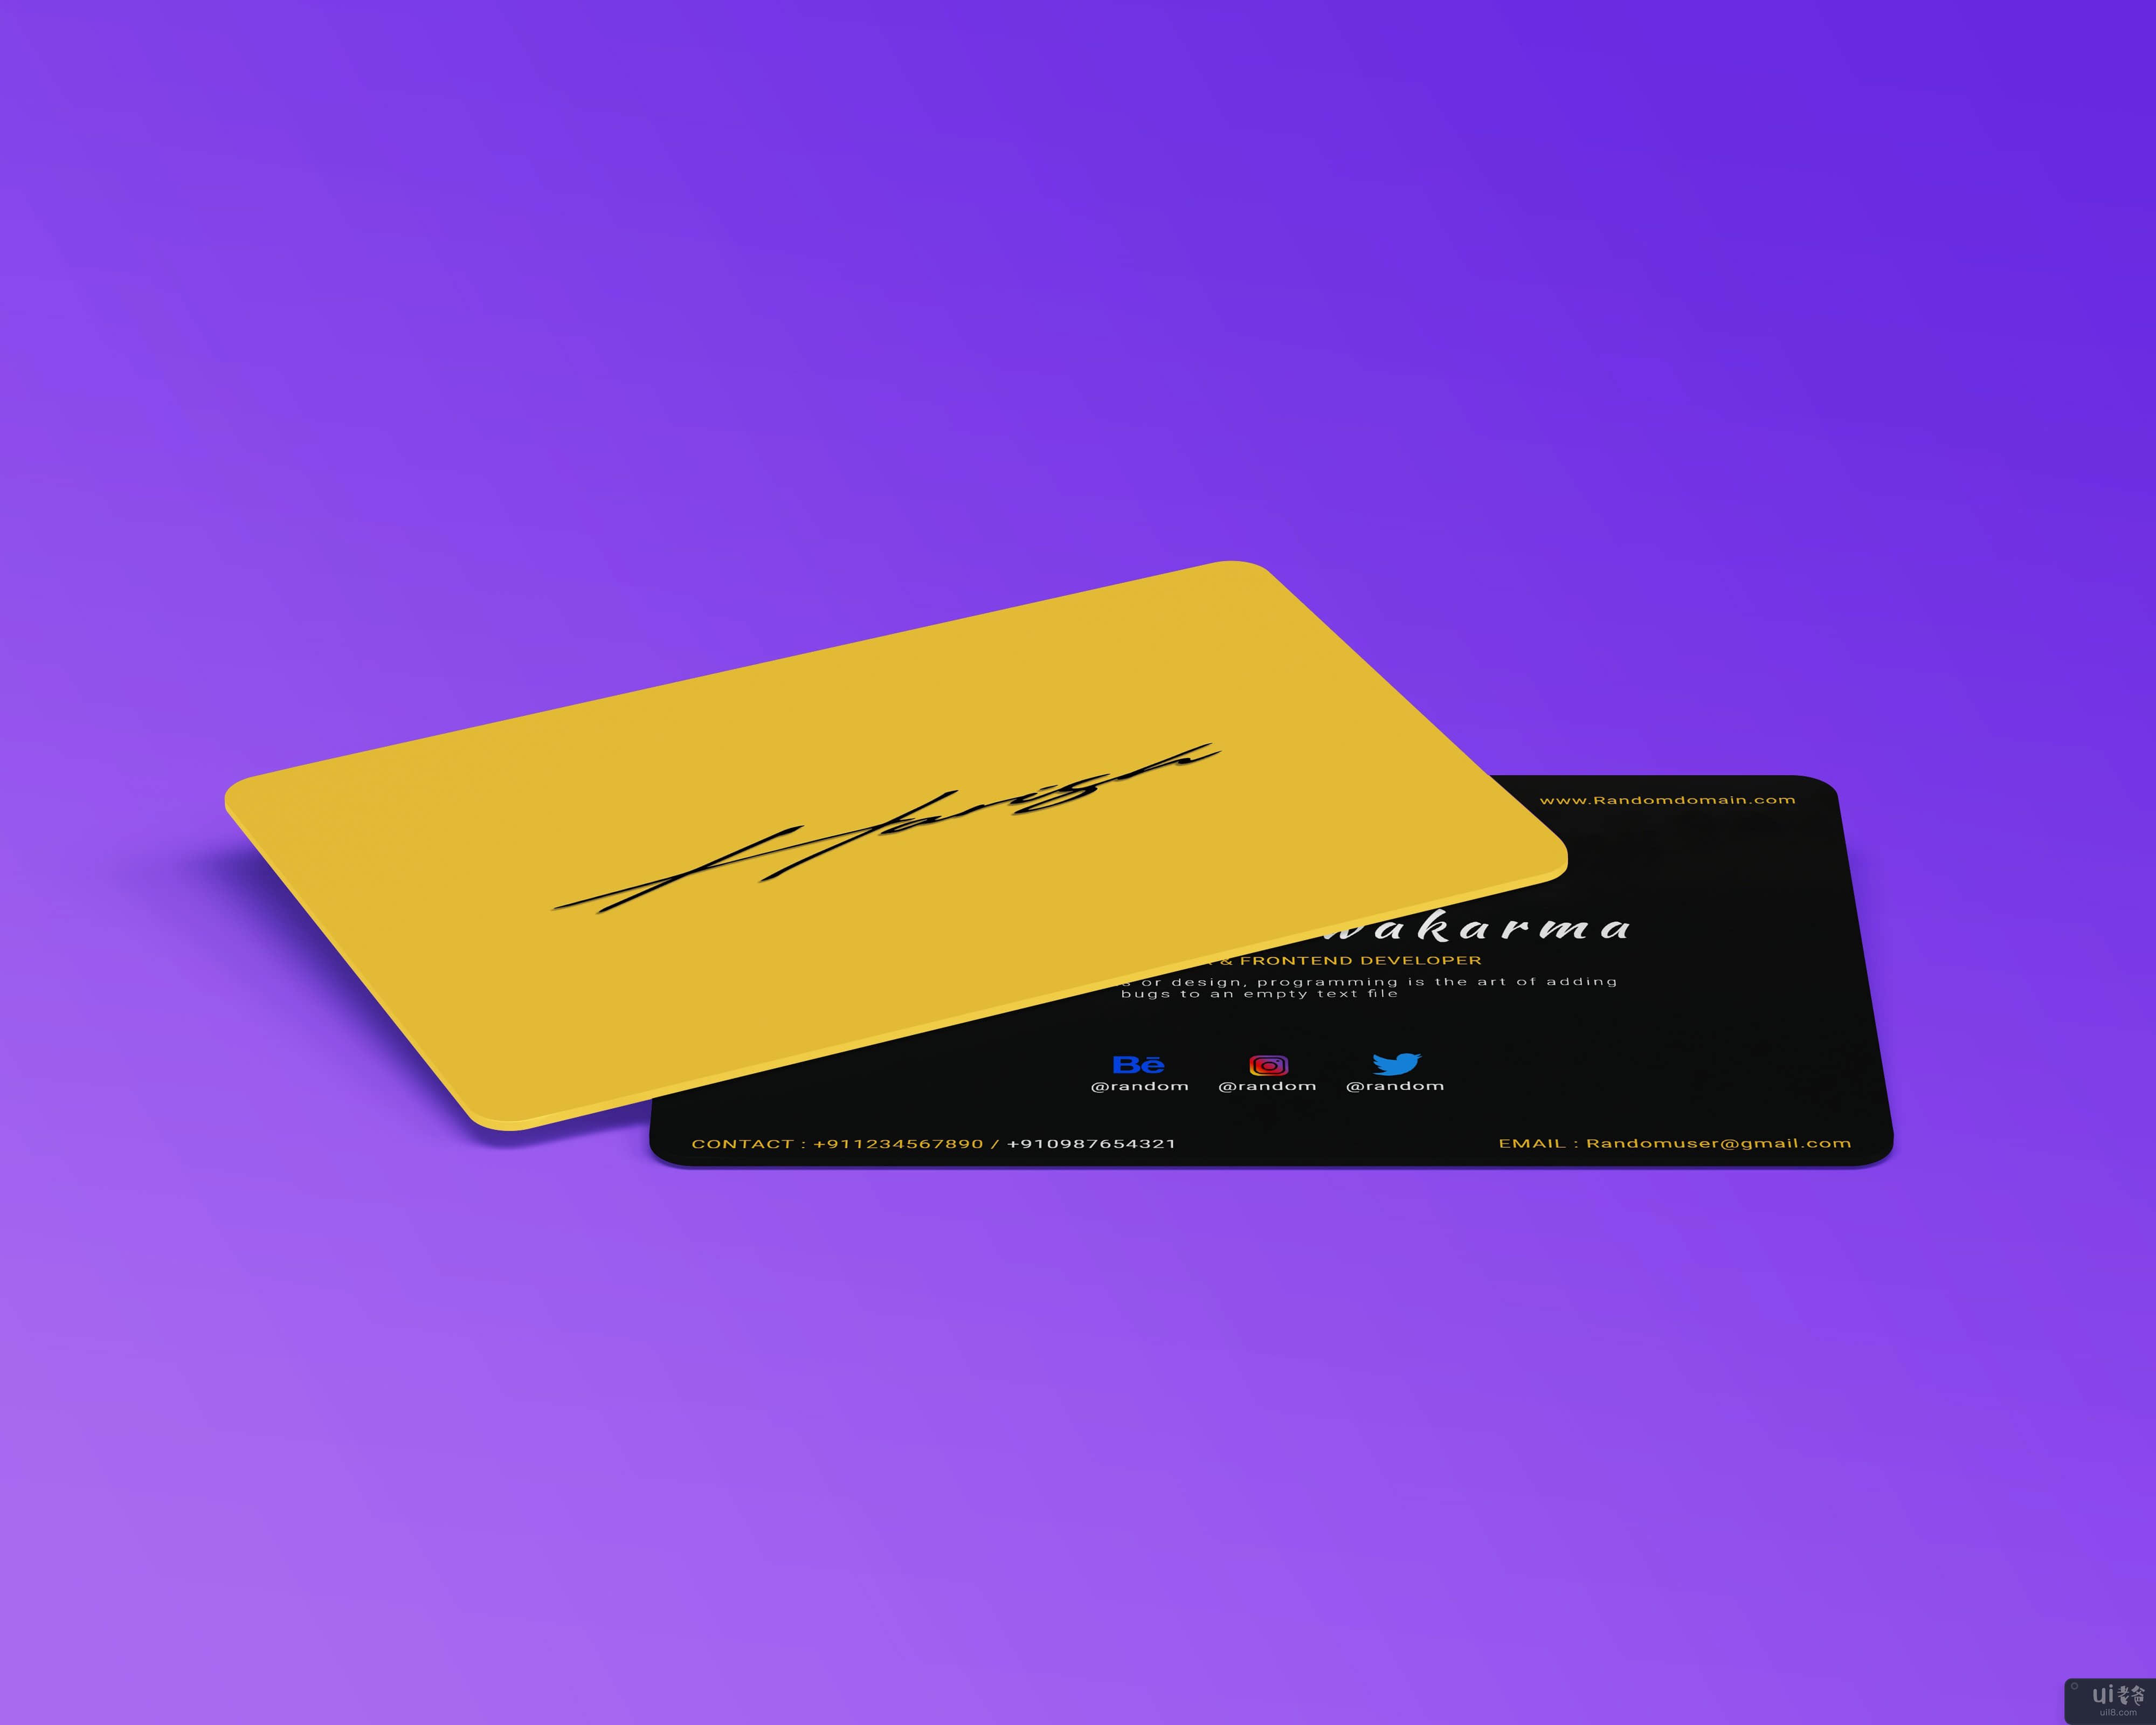 个人名片(Personal Business card)插图1